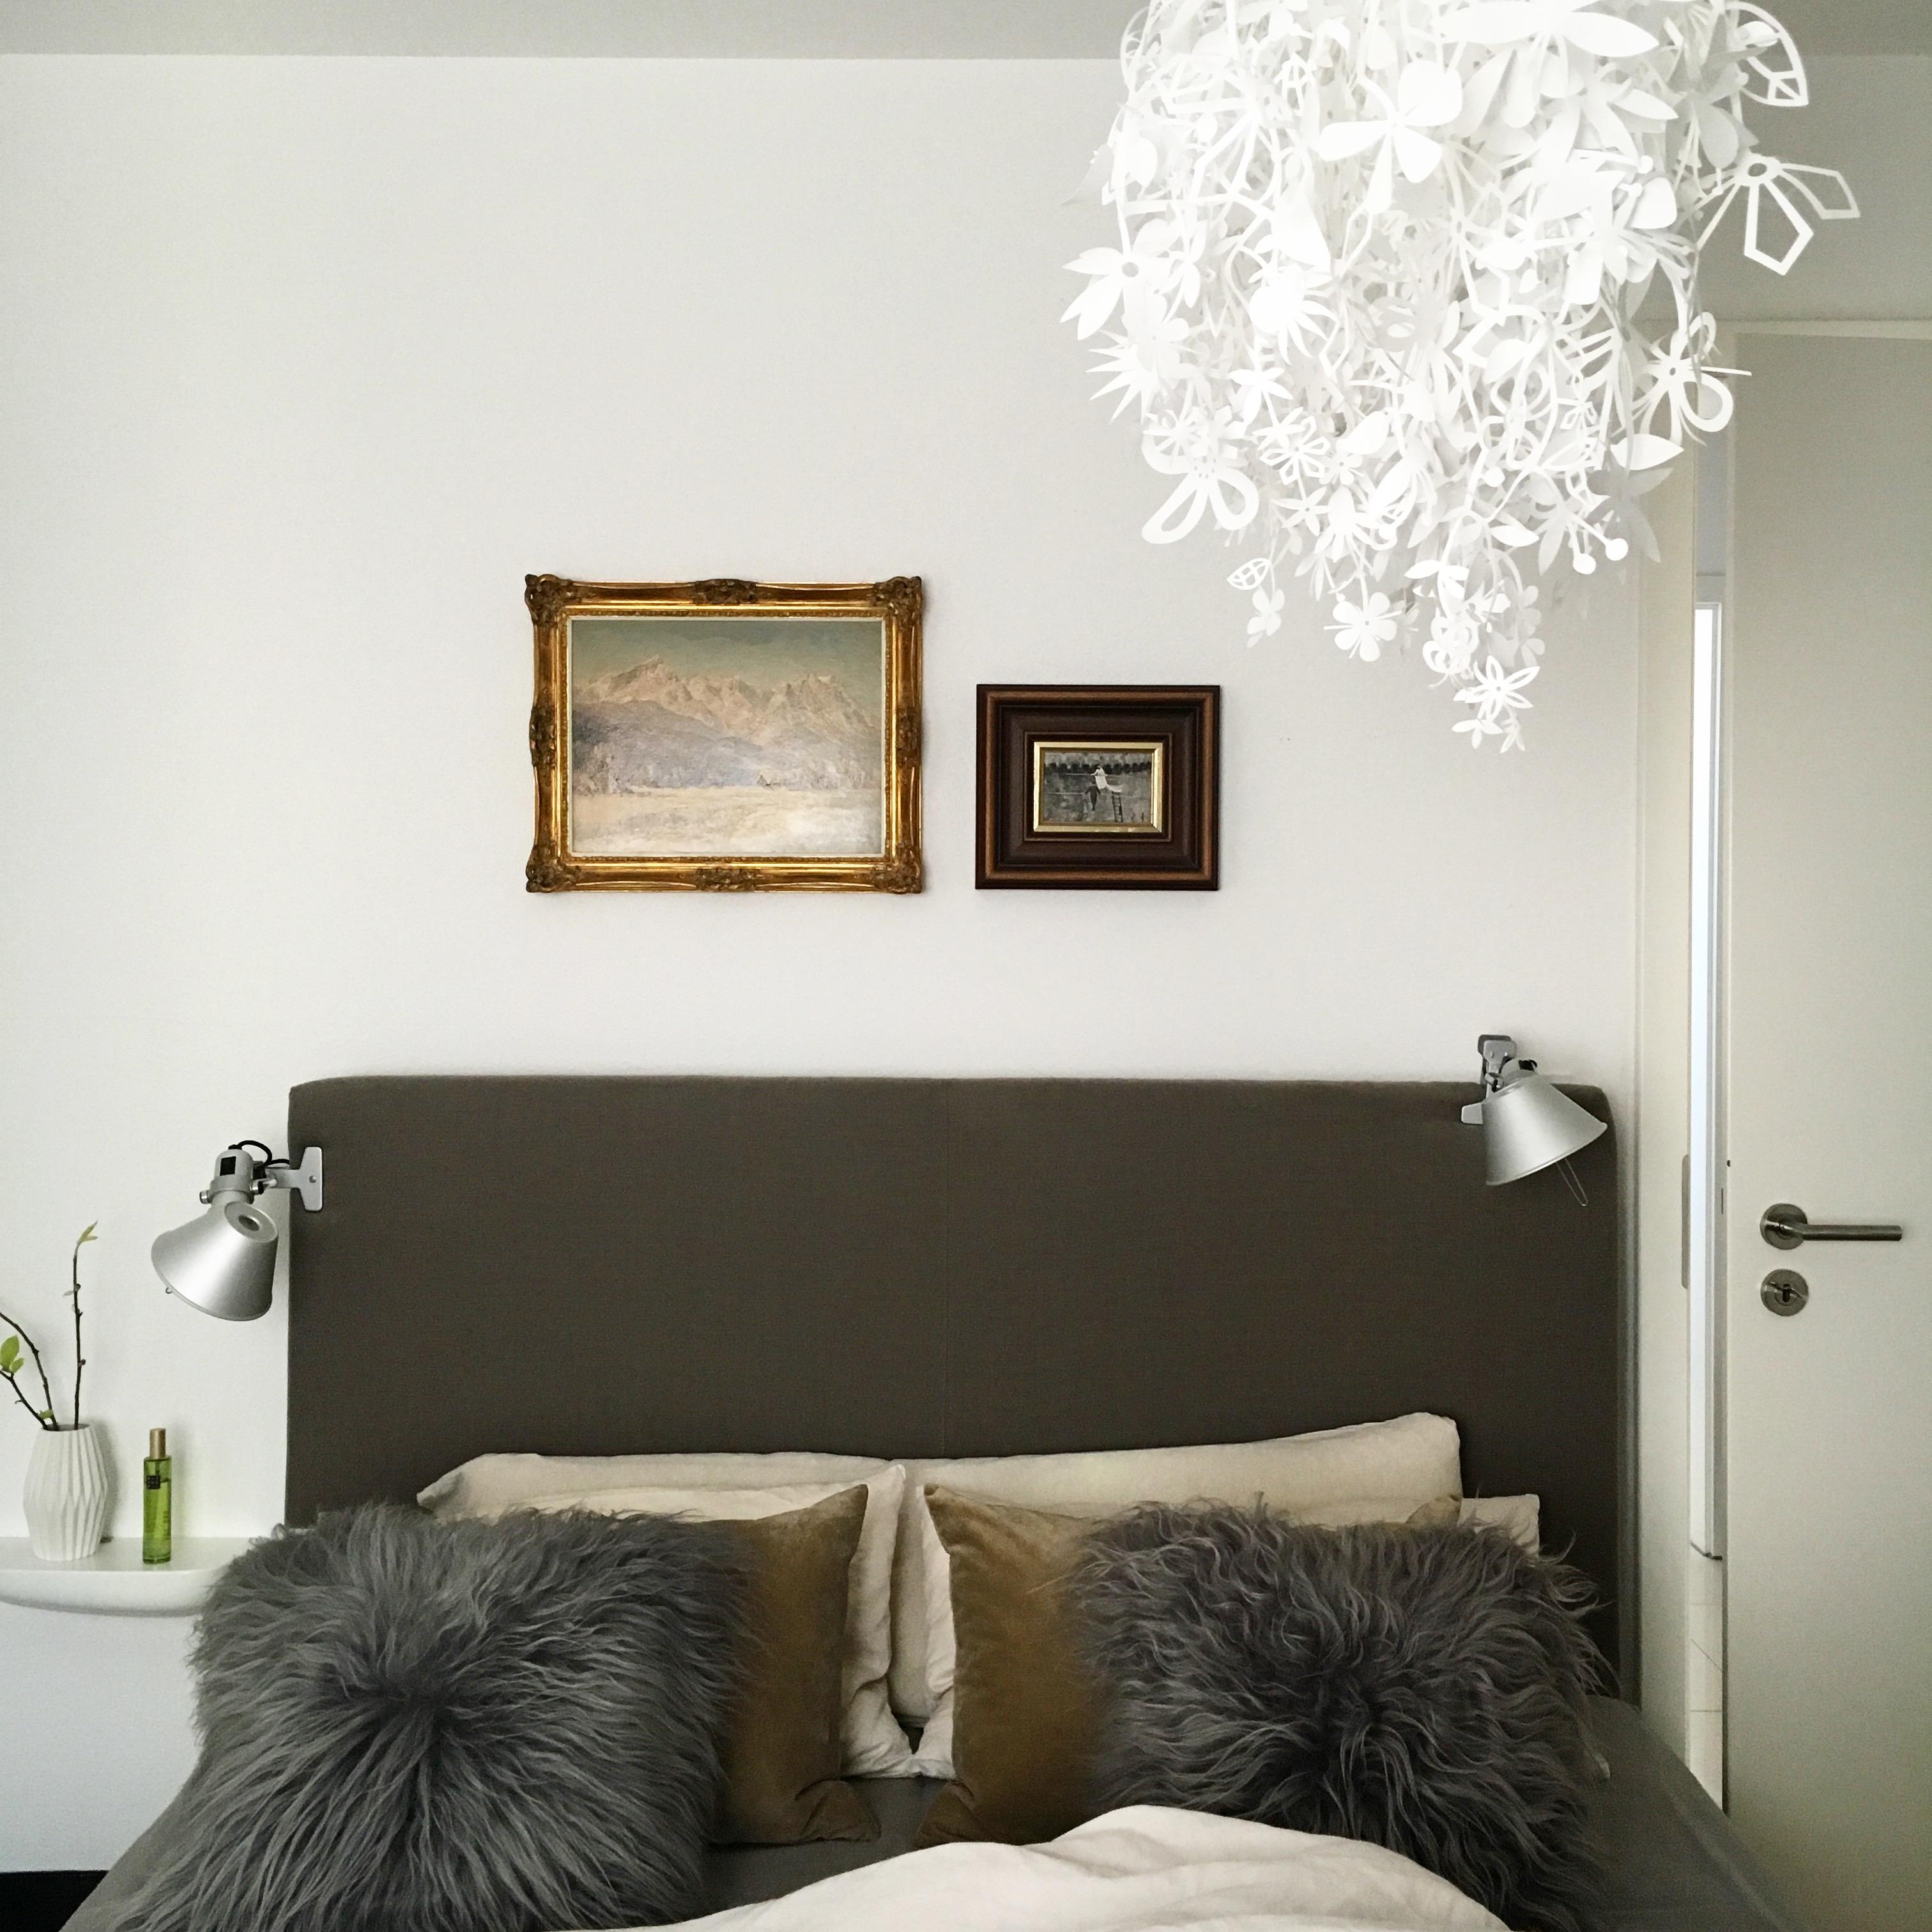 Schlafzimmer #bett #bilderrahmen #bettwäsche #klemmleuchte #lammfell ©ALL ABOUT DESIGN by Christina Harmsen